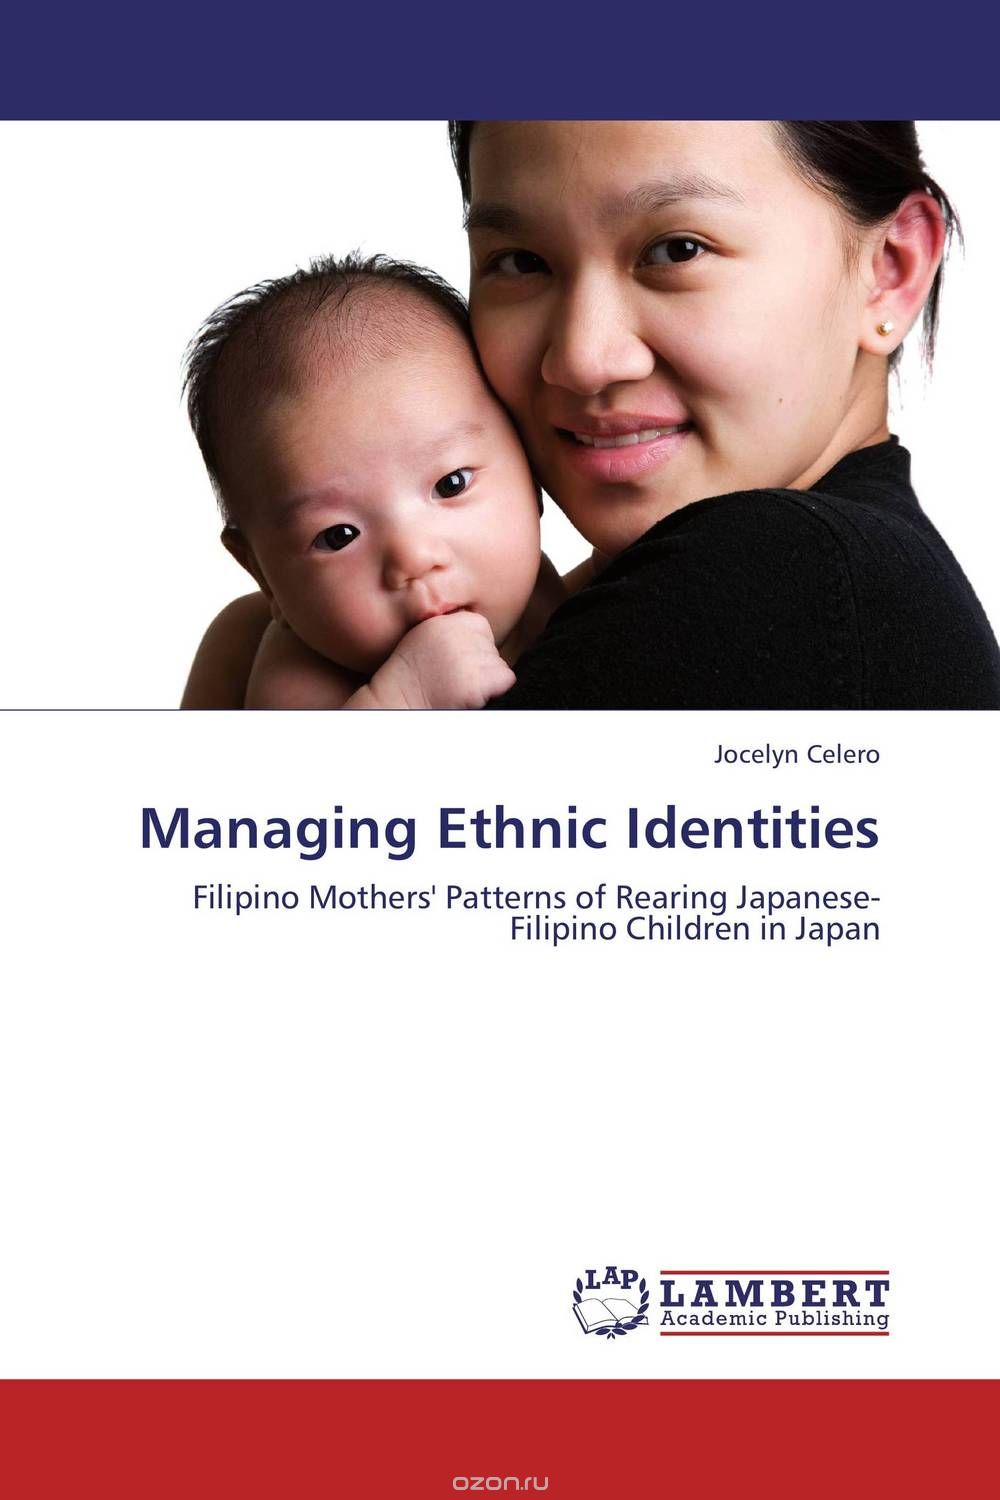 Скачать книгу "Managing Ethnic Identities"